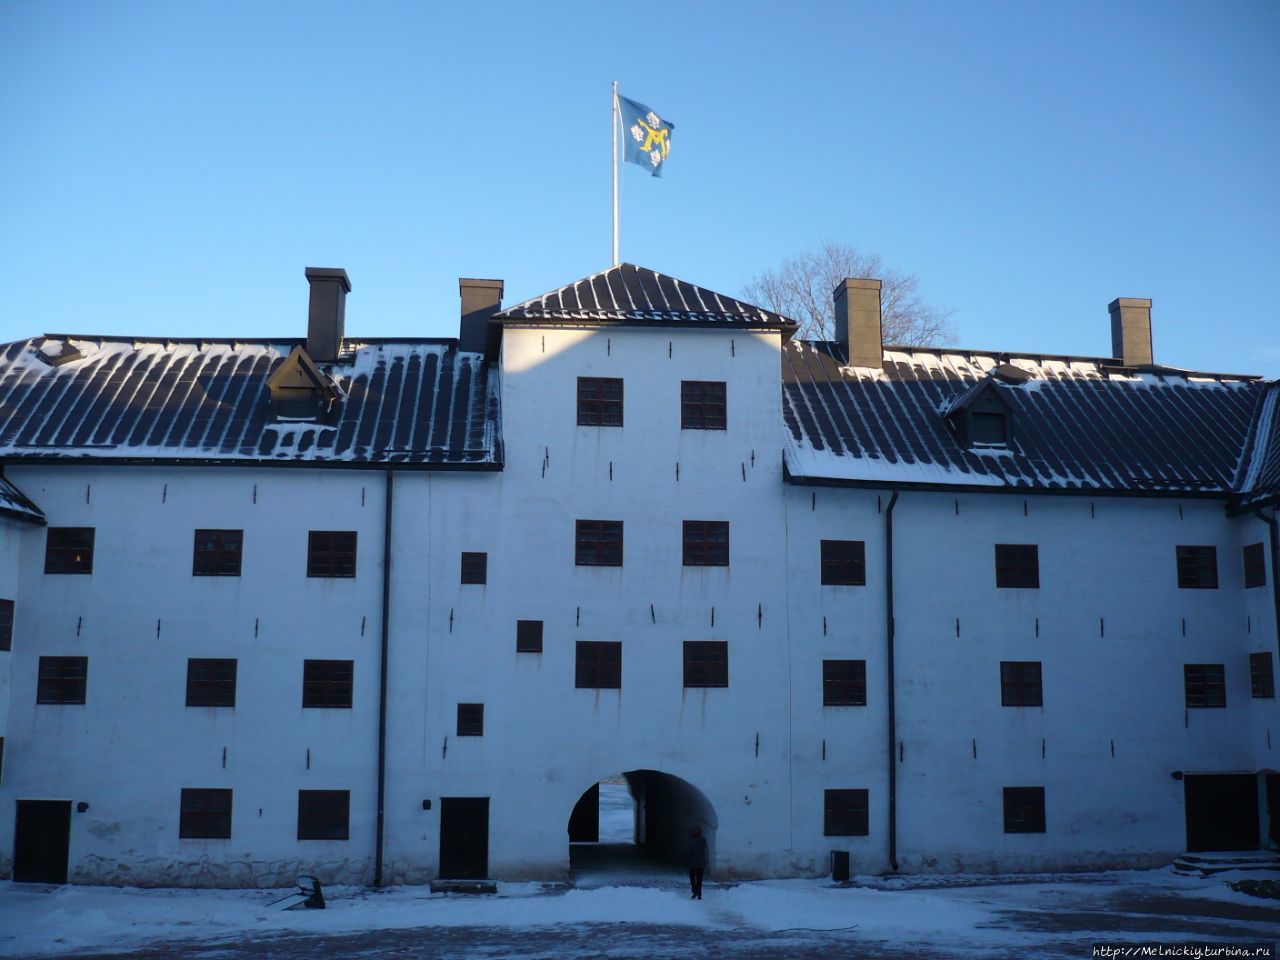 Залы и интерьеры Абоского замка Турку, Финляндия